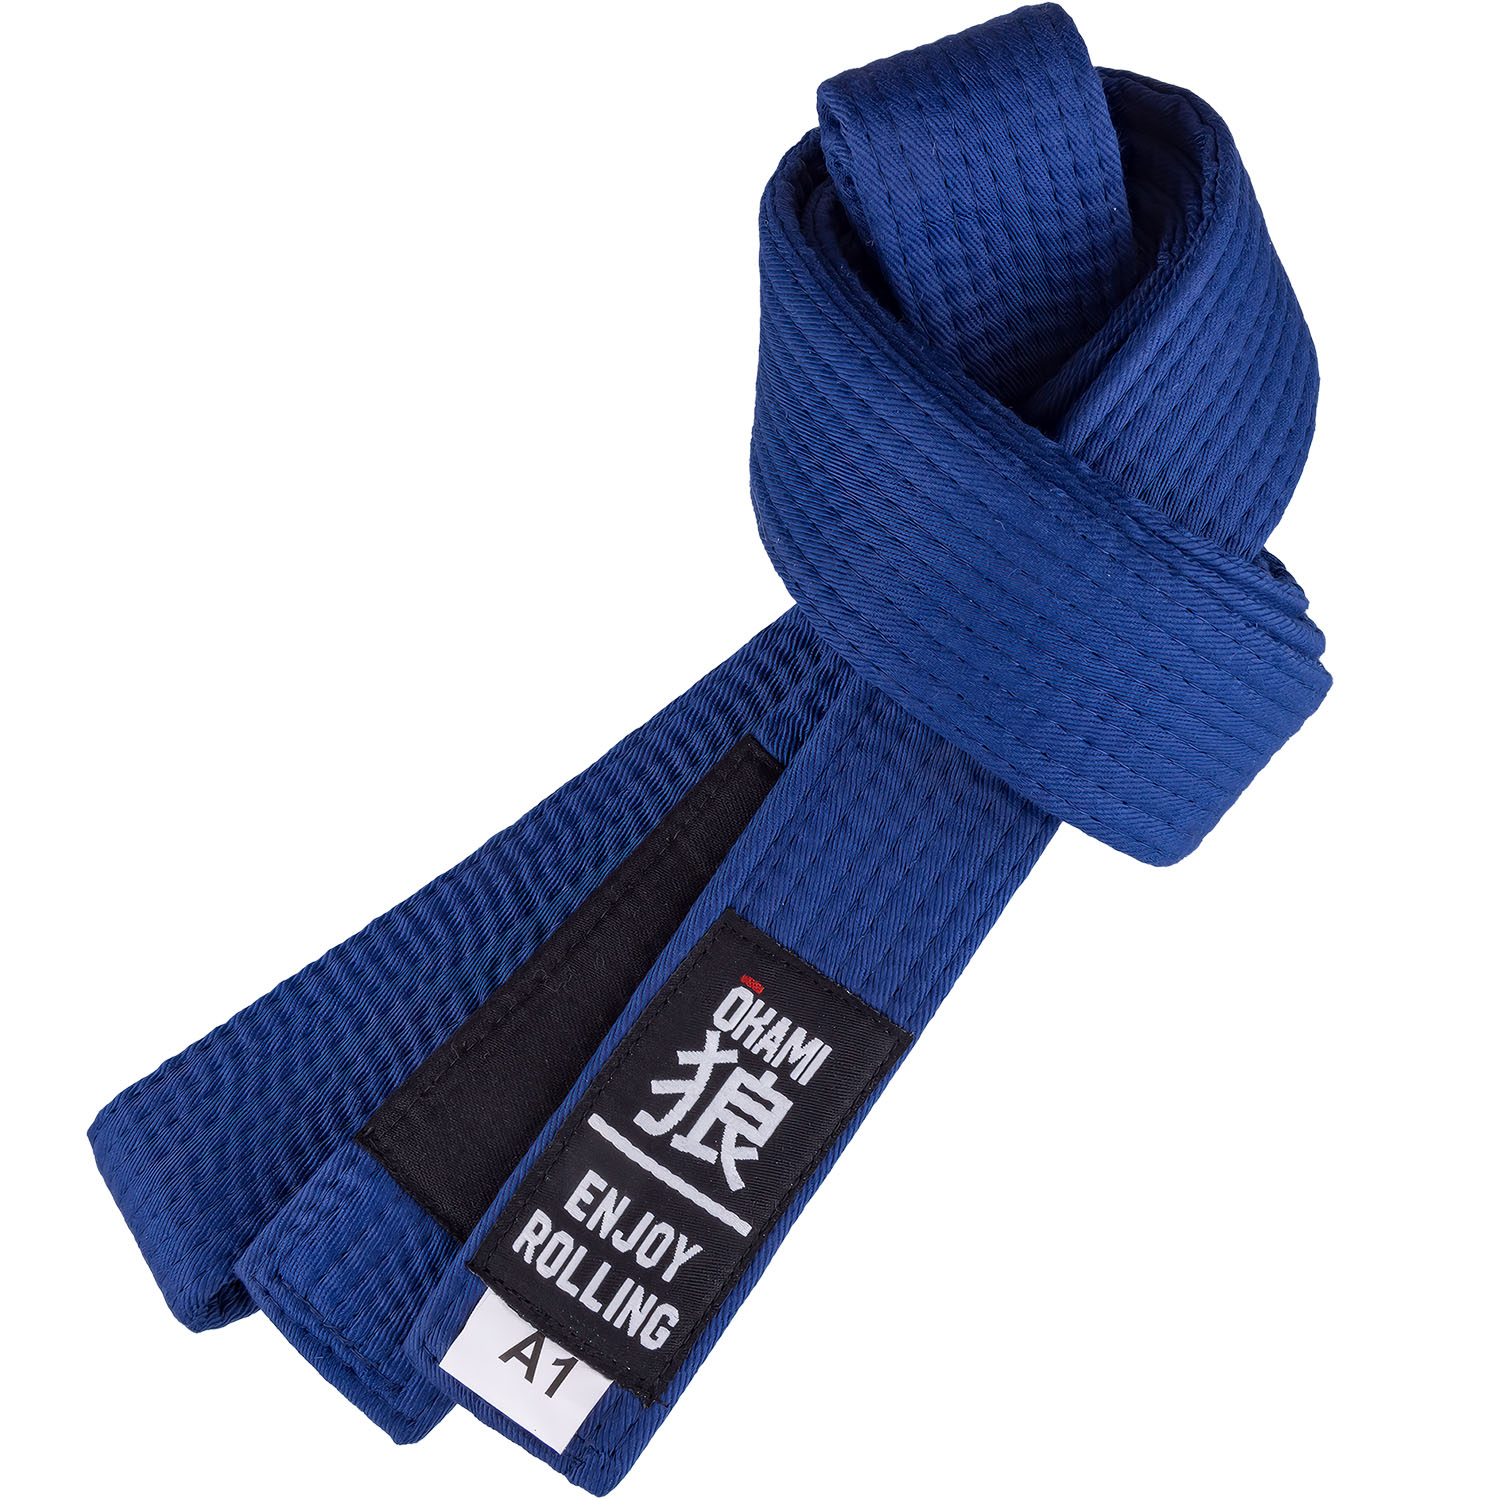 OKAMI BJJ Belt, Luta Livre, blue